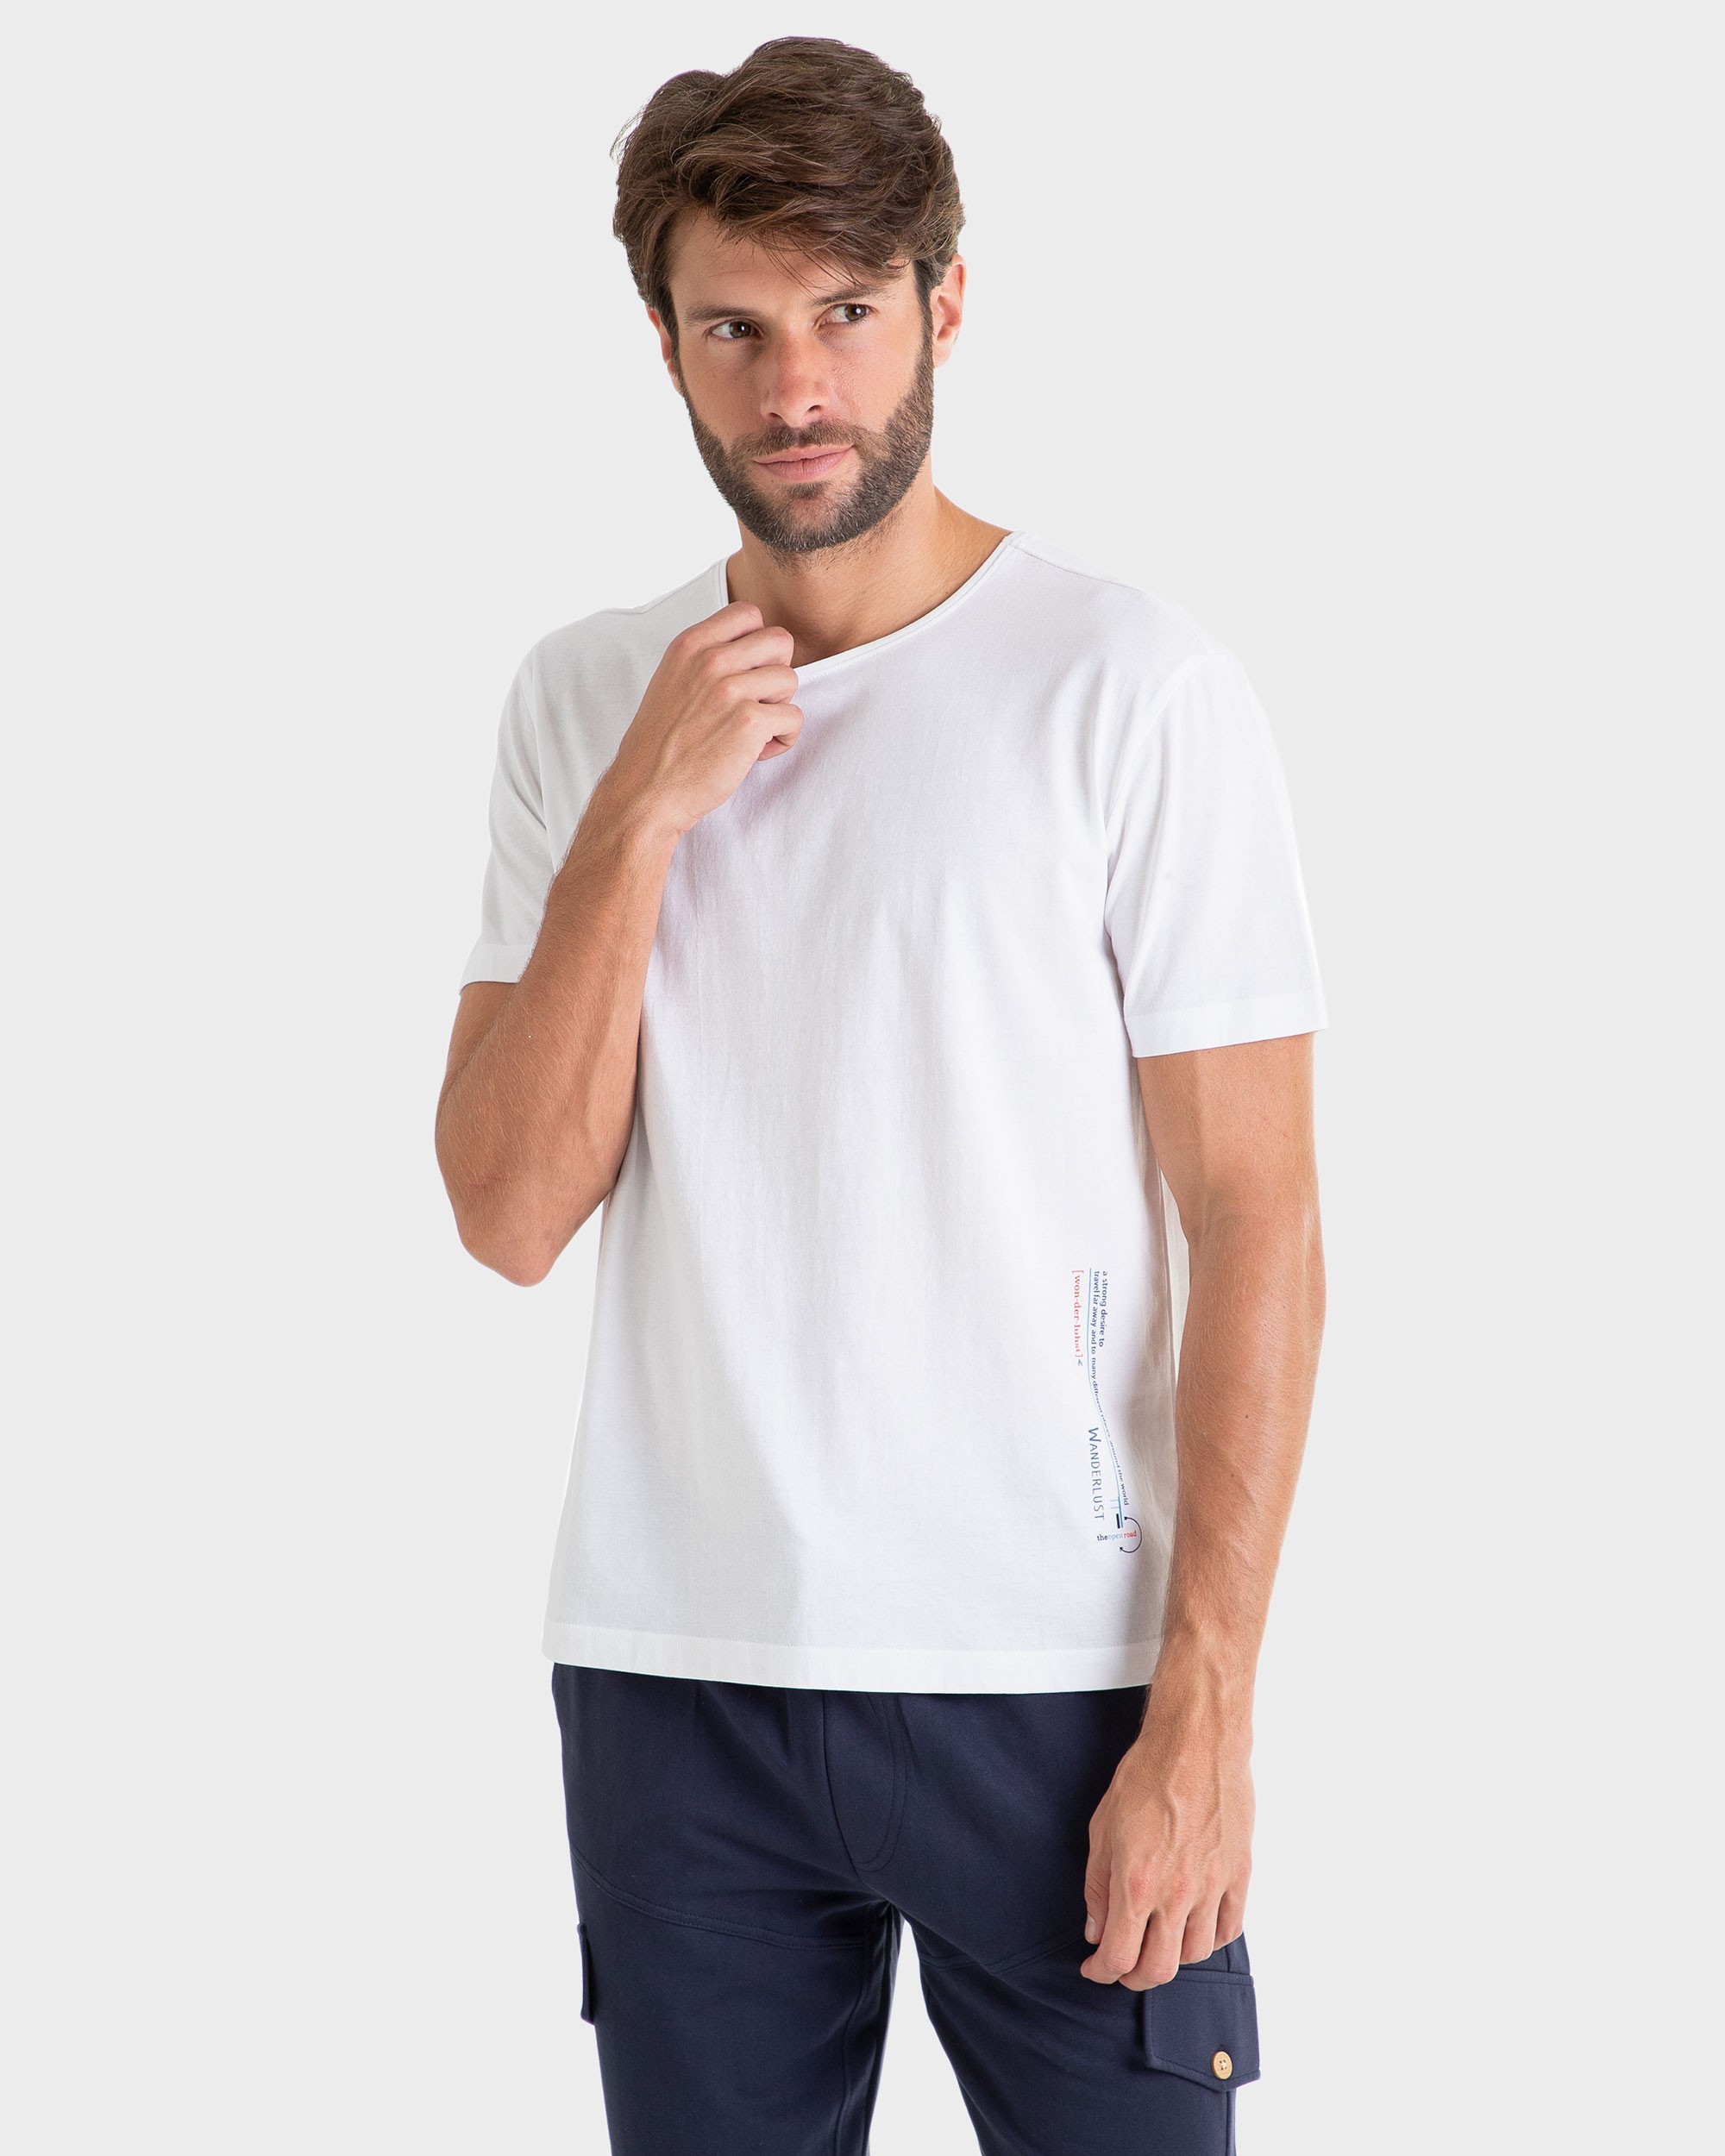 Camiseta manga corta hombre Strong blanco